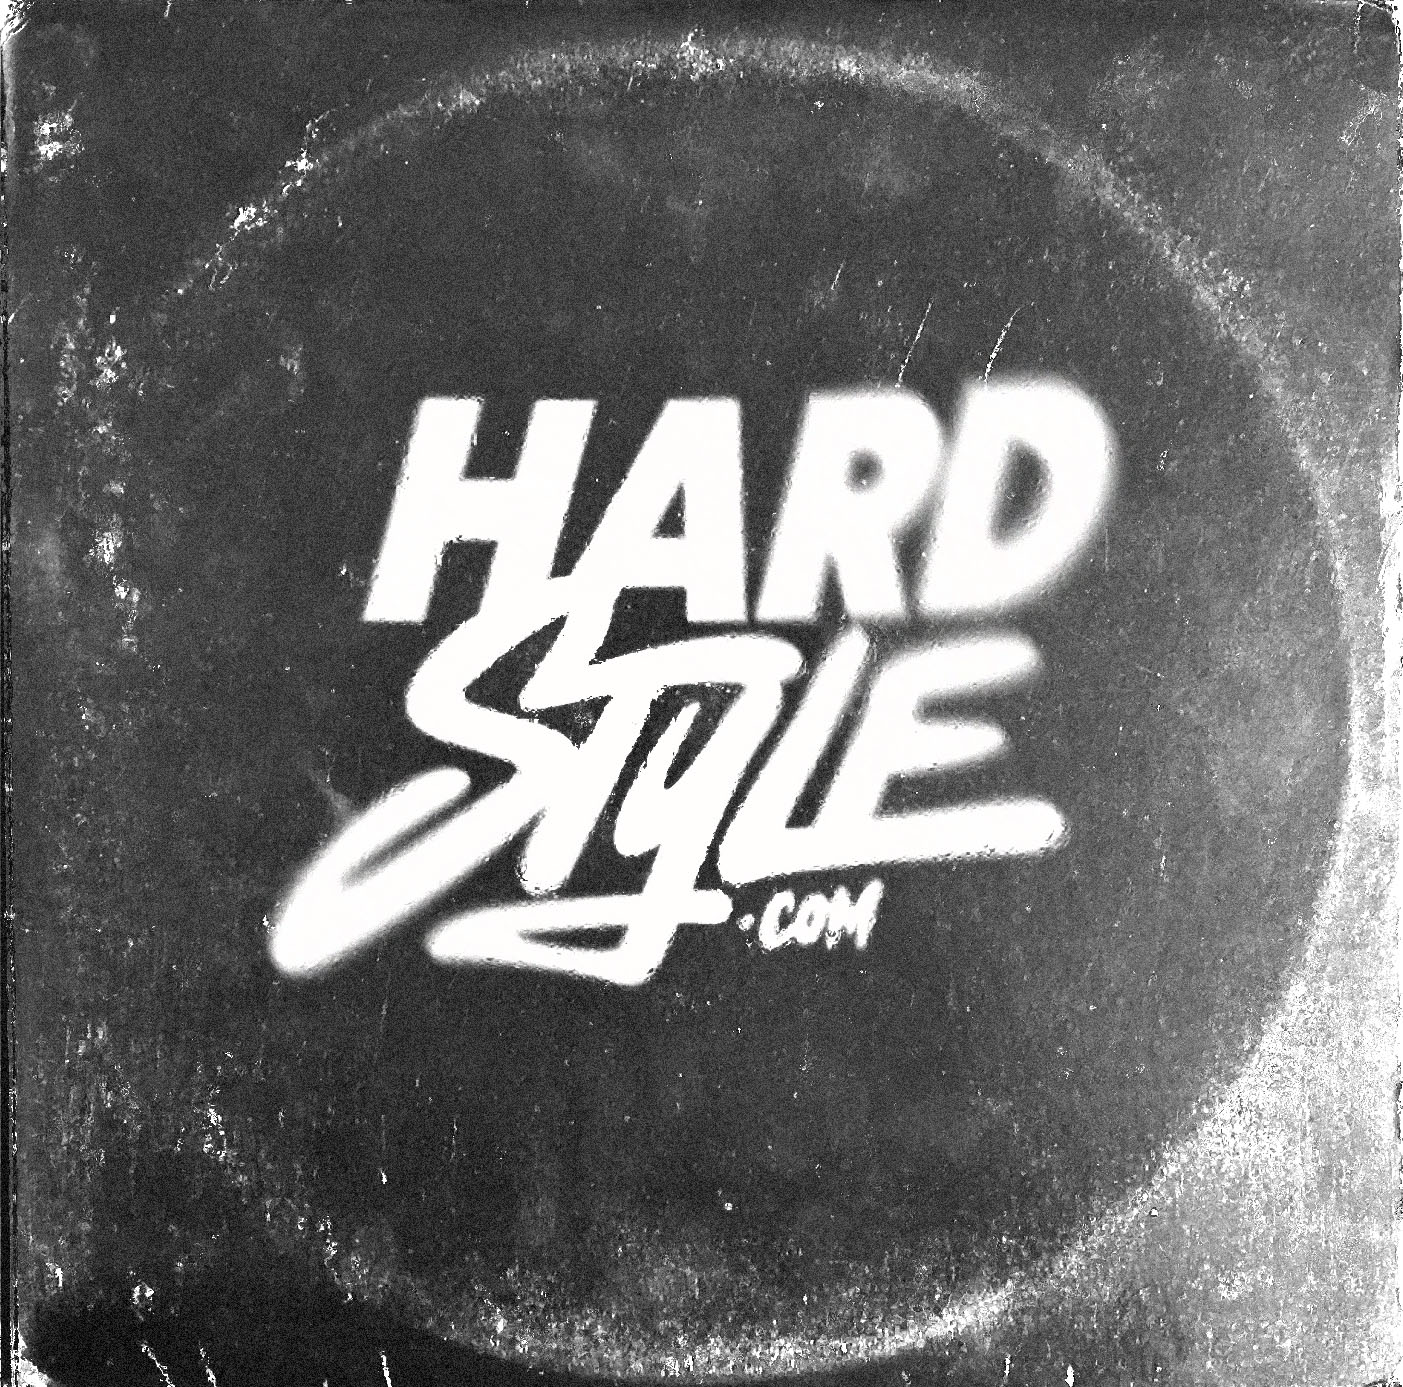 Various Hard EP